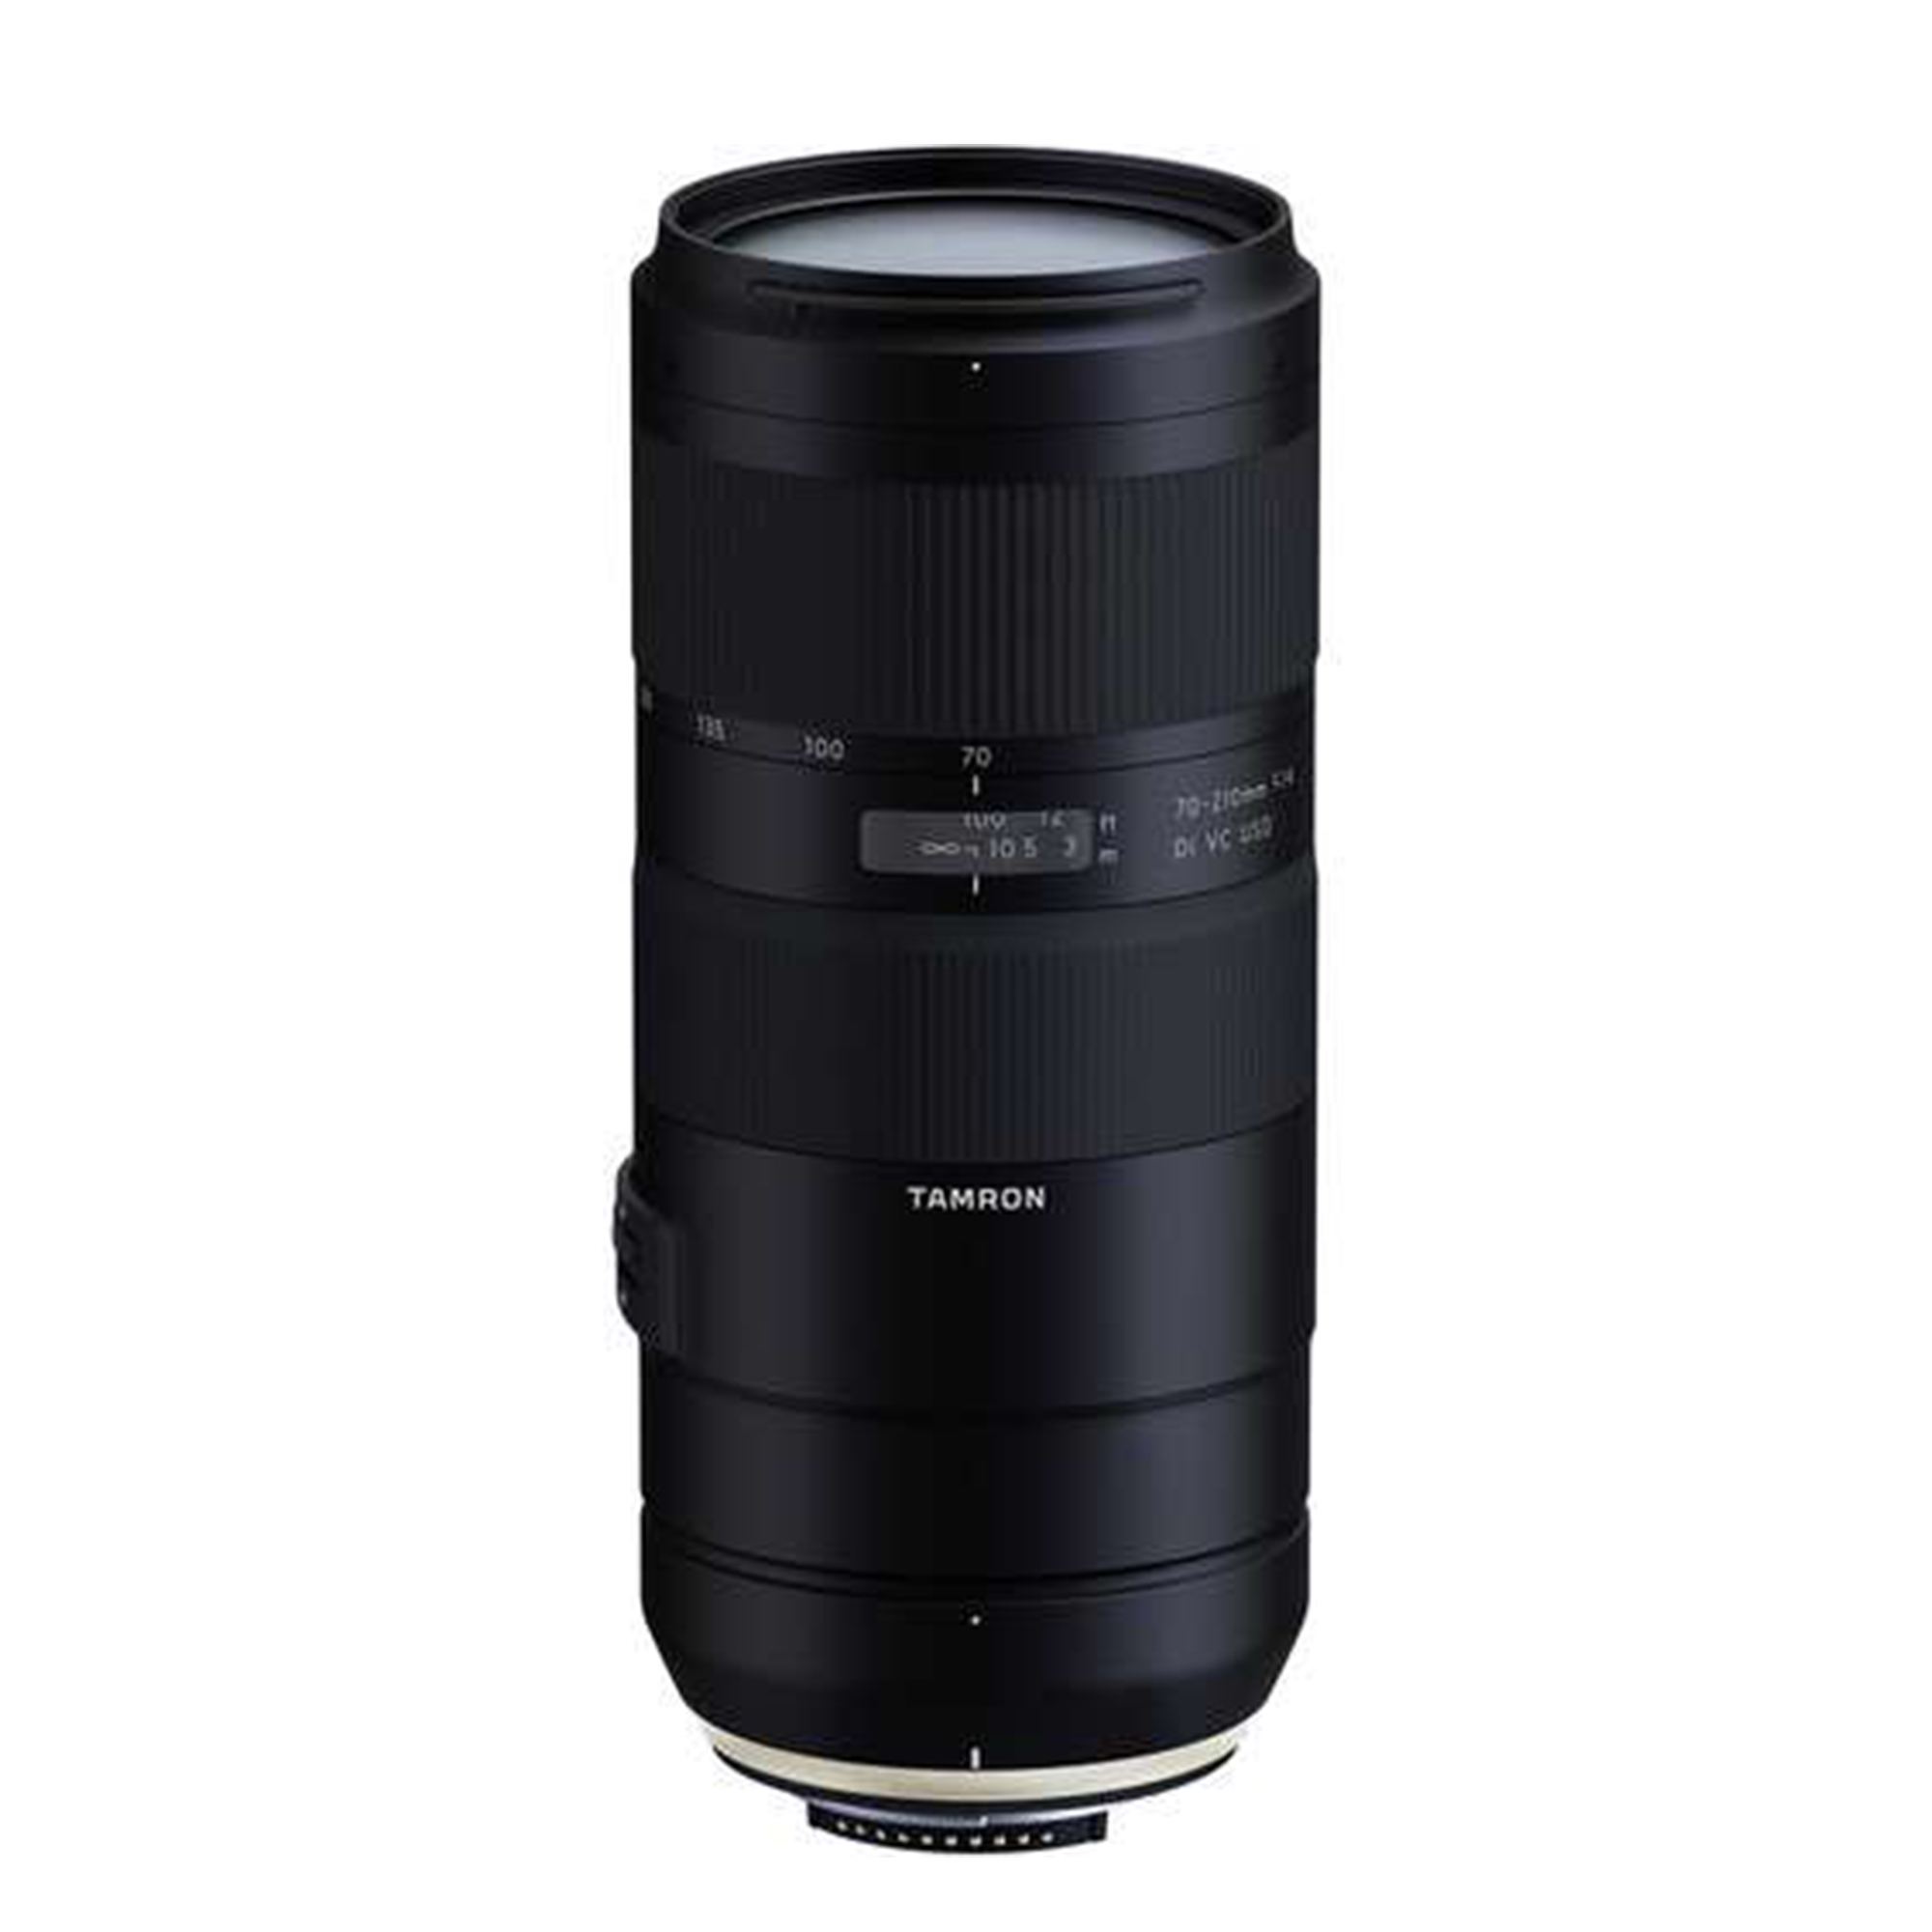 Tamron 70-210mm f/4 Di VC USD Lens for Nikon AF